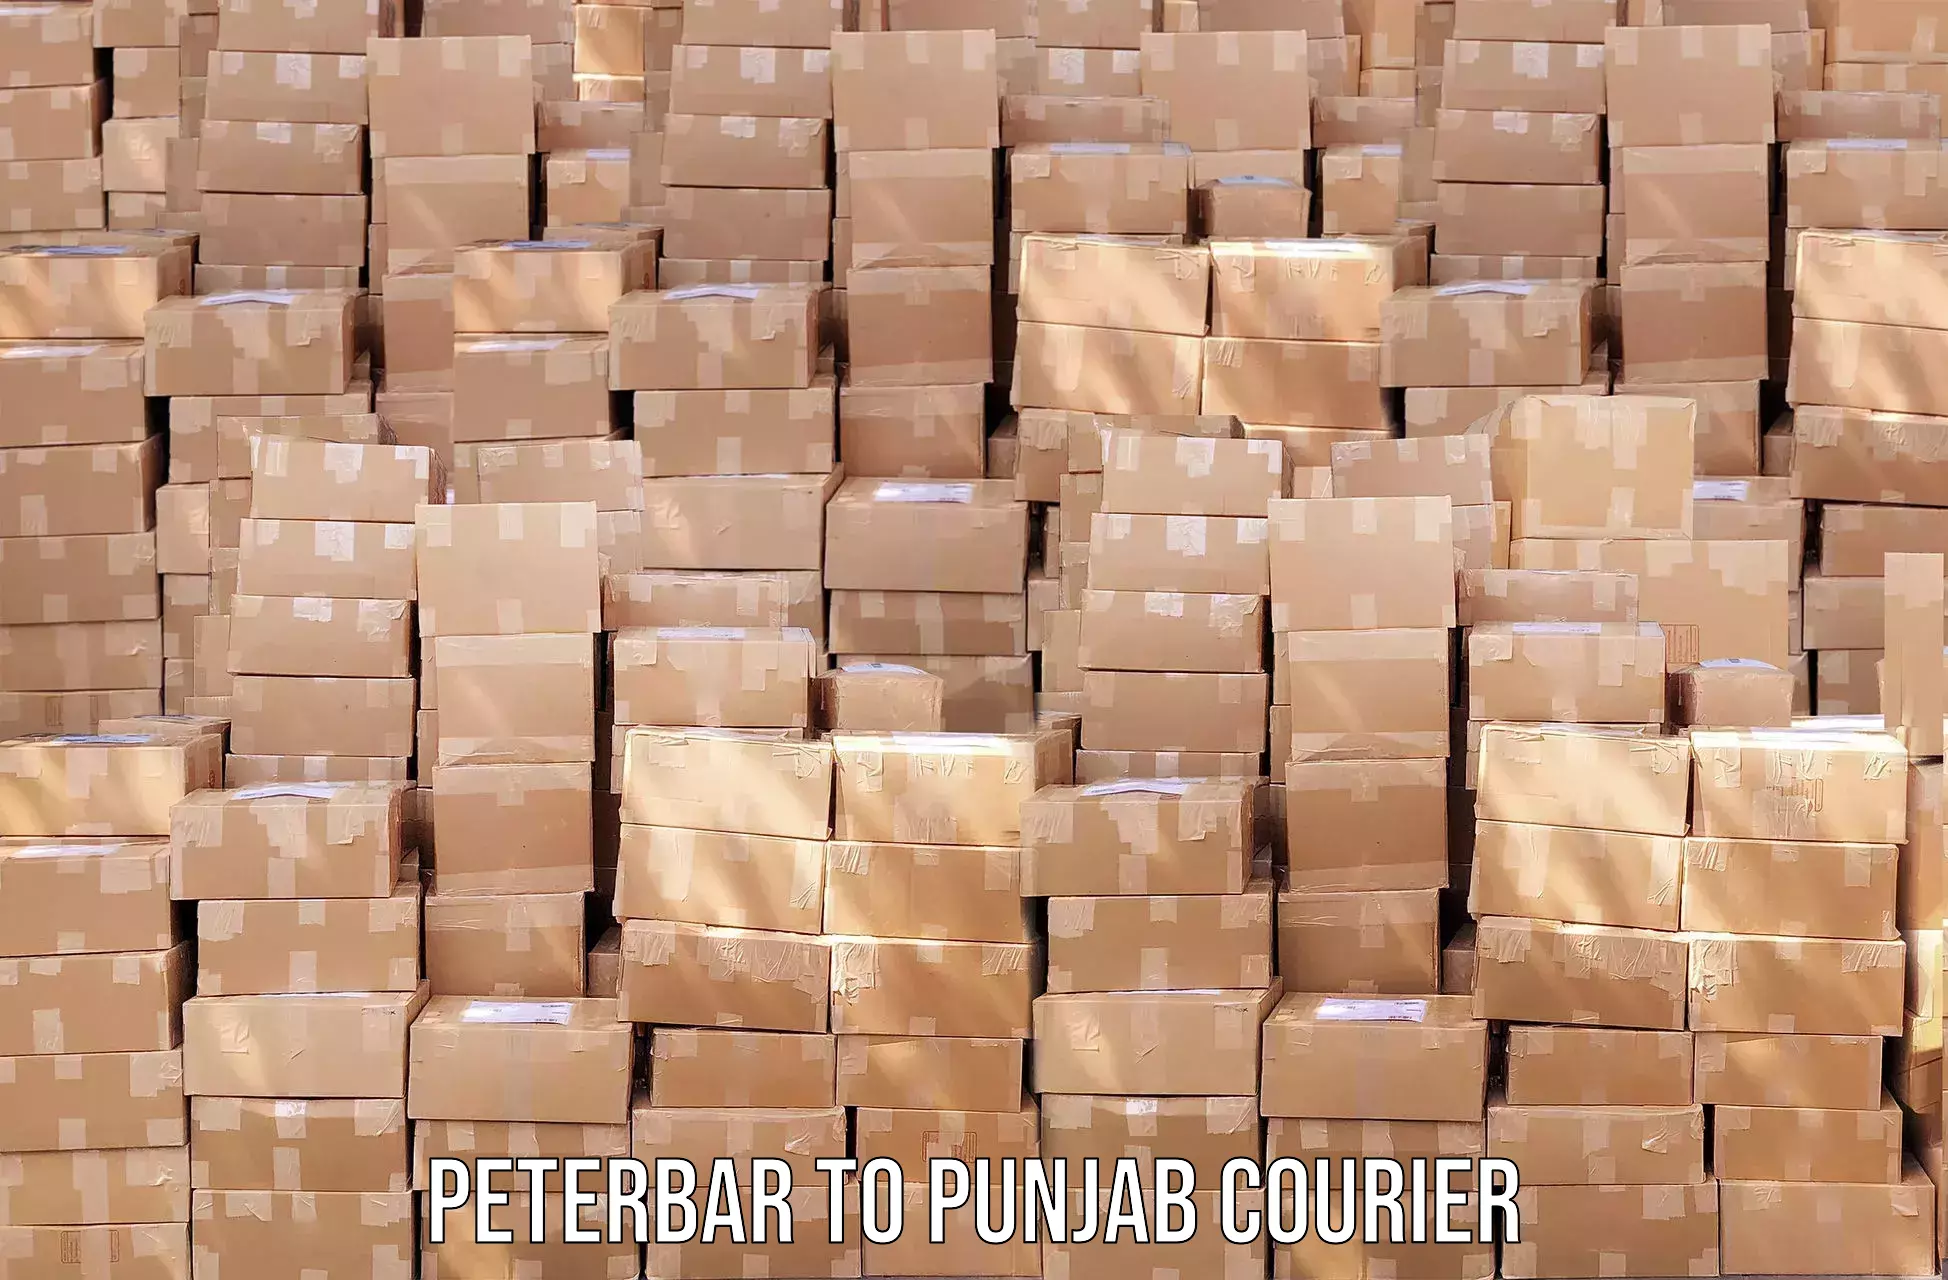 Urgent courier needs Peterbar to Punjab